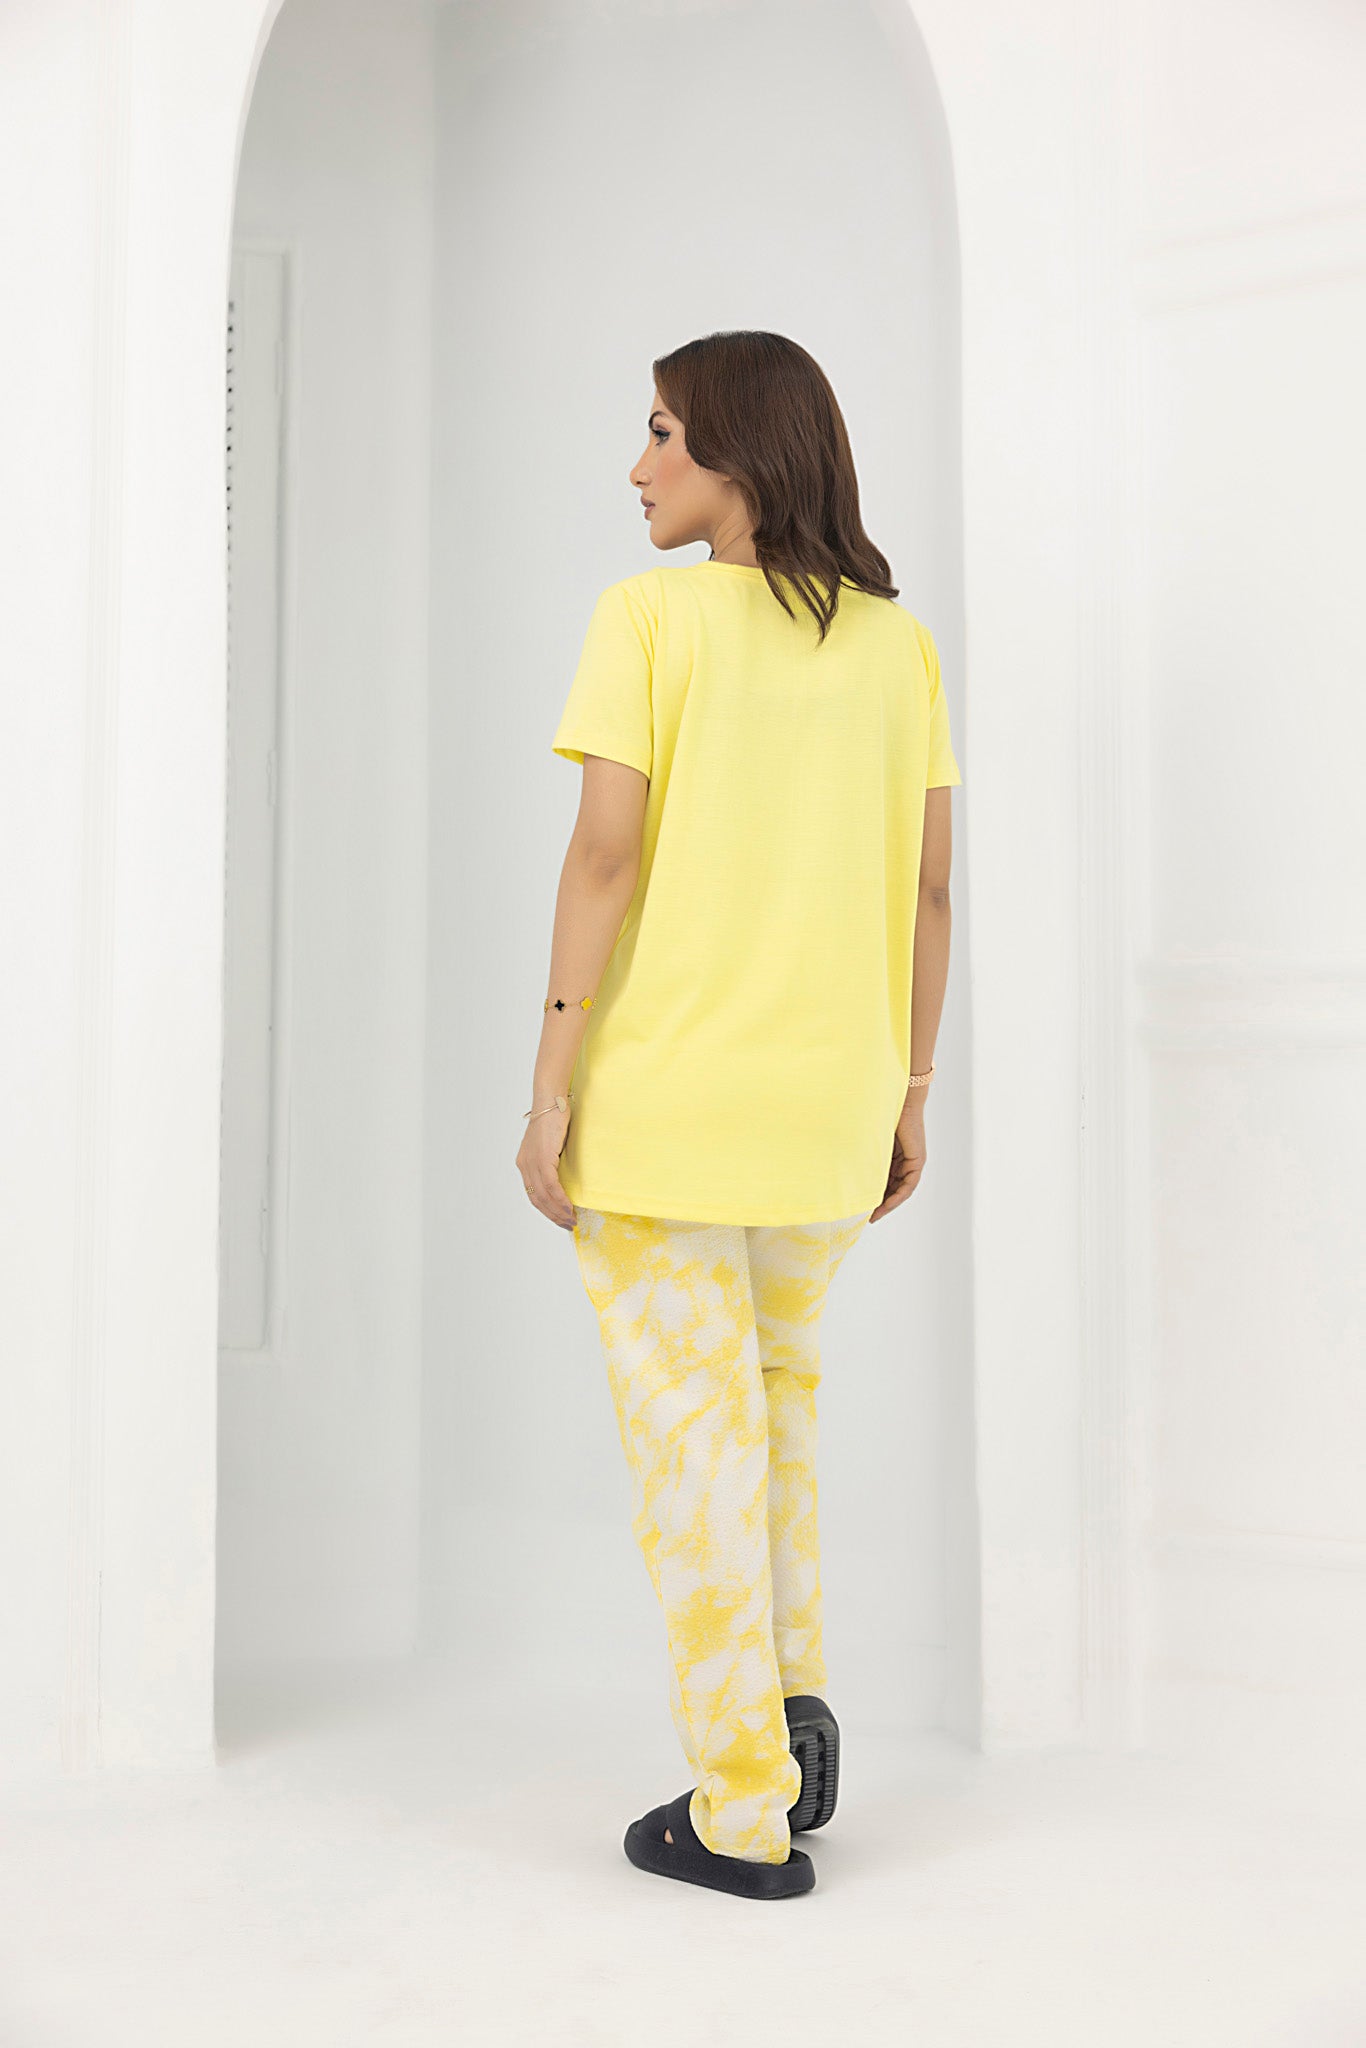 TTR Jersey and Pyjama set (L.Yellow)